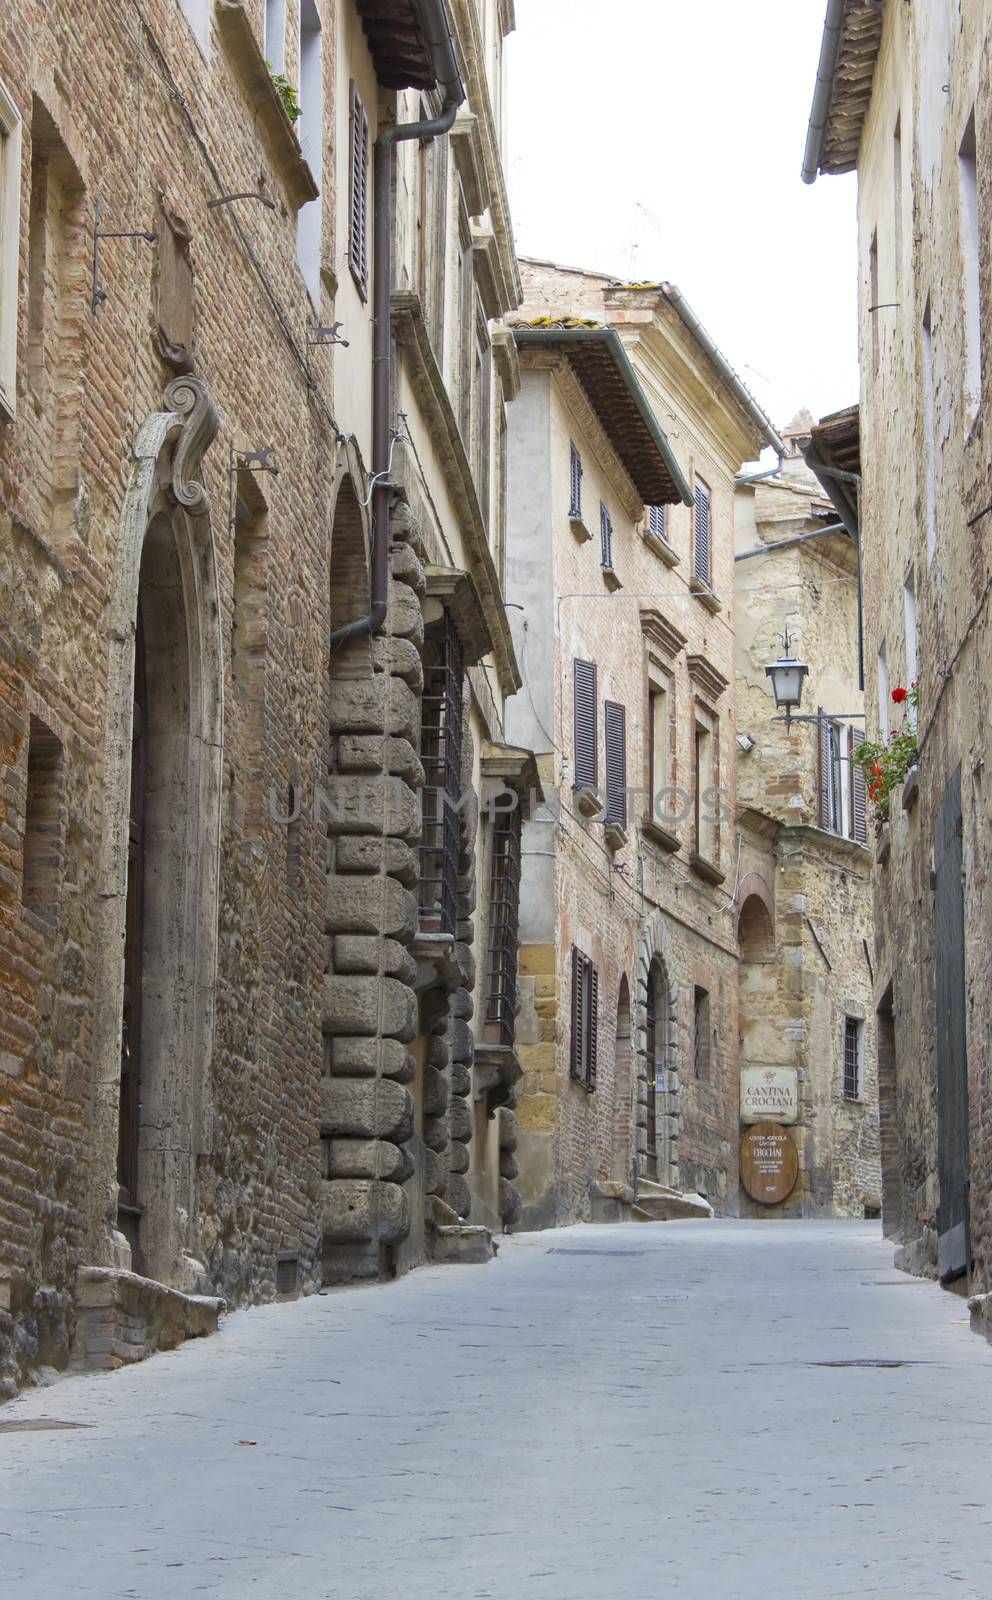 lovely tuscan street - Montepulciano, Italy by miradrozdowski